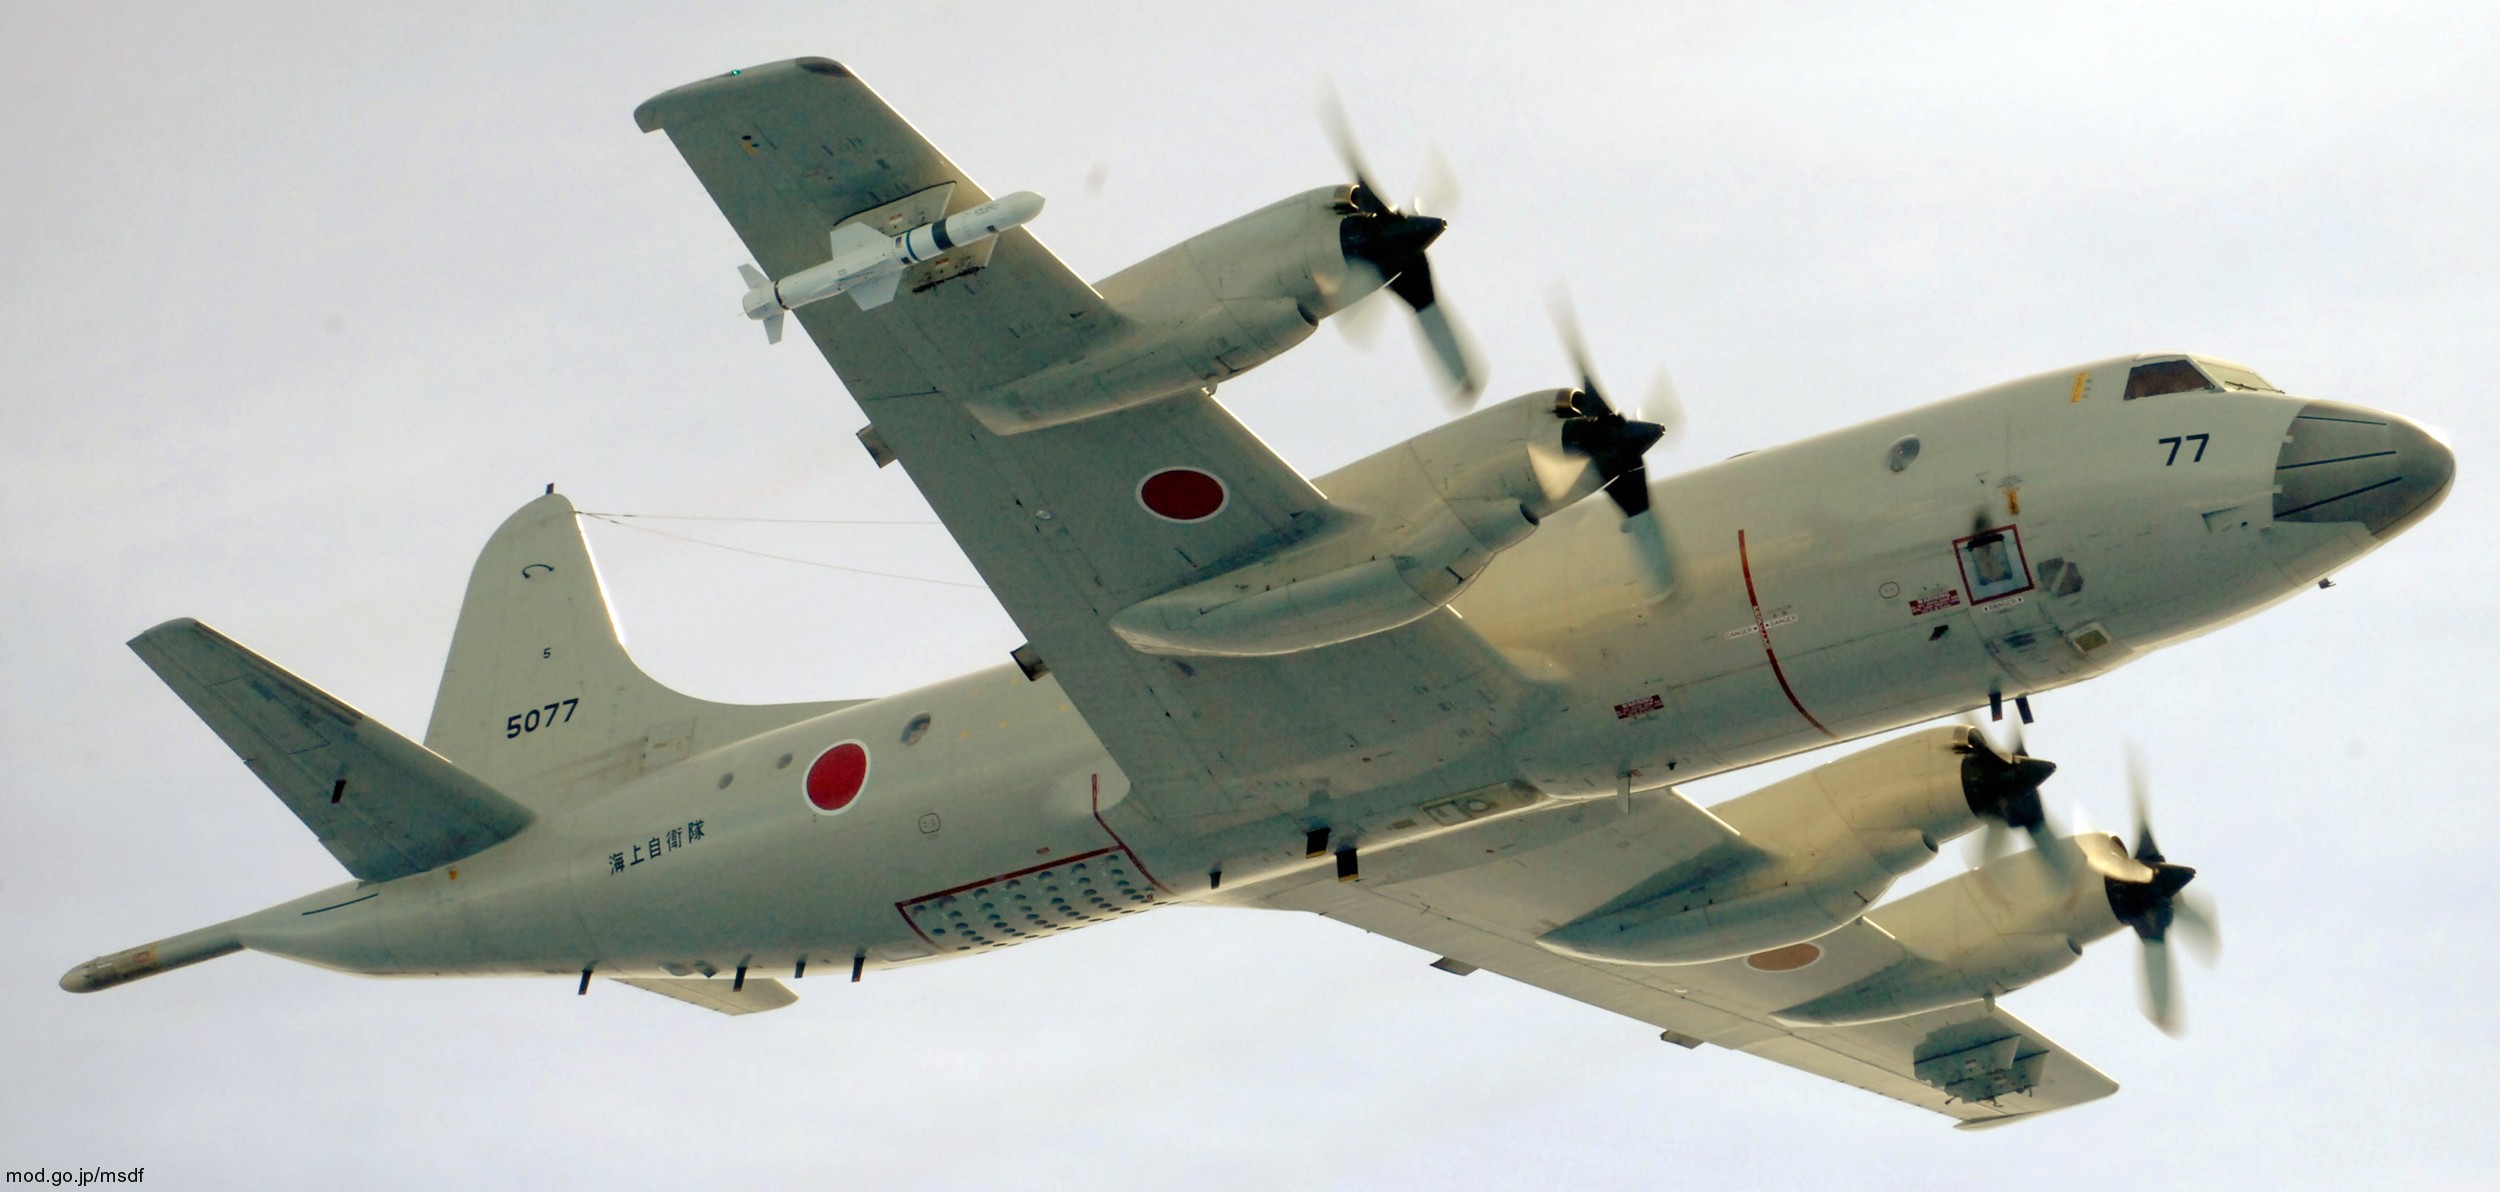 kawasaki p-3c orion patrol aircraft mpa japan maritime self defense force jmsdf 5077 02